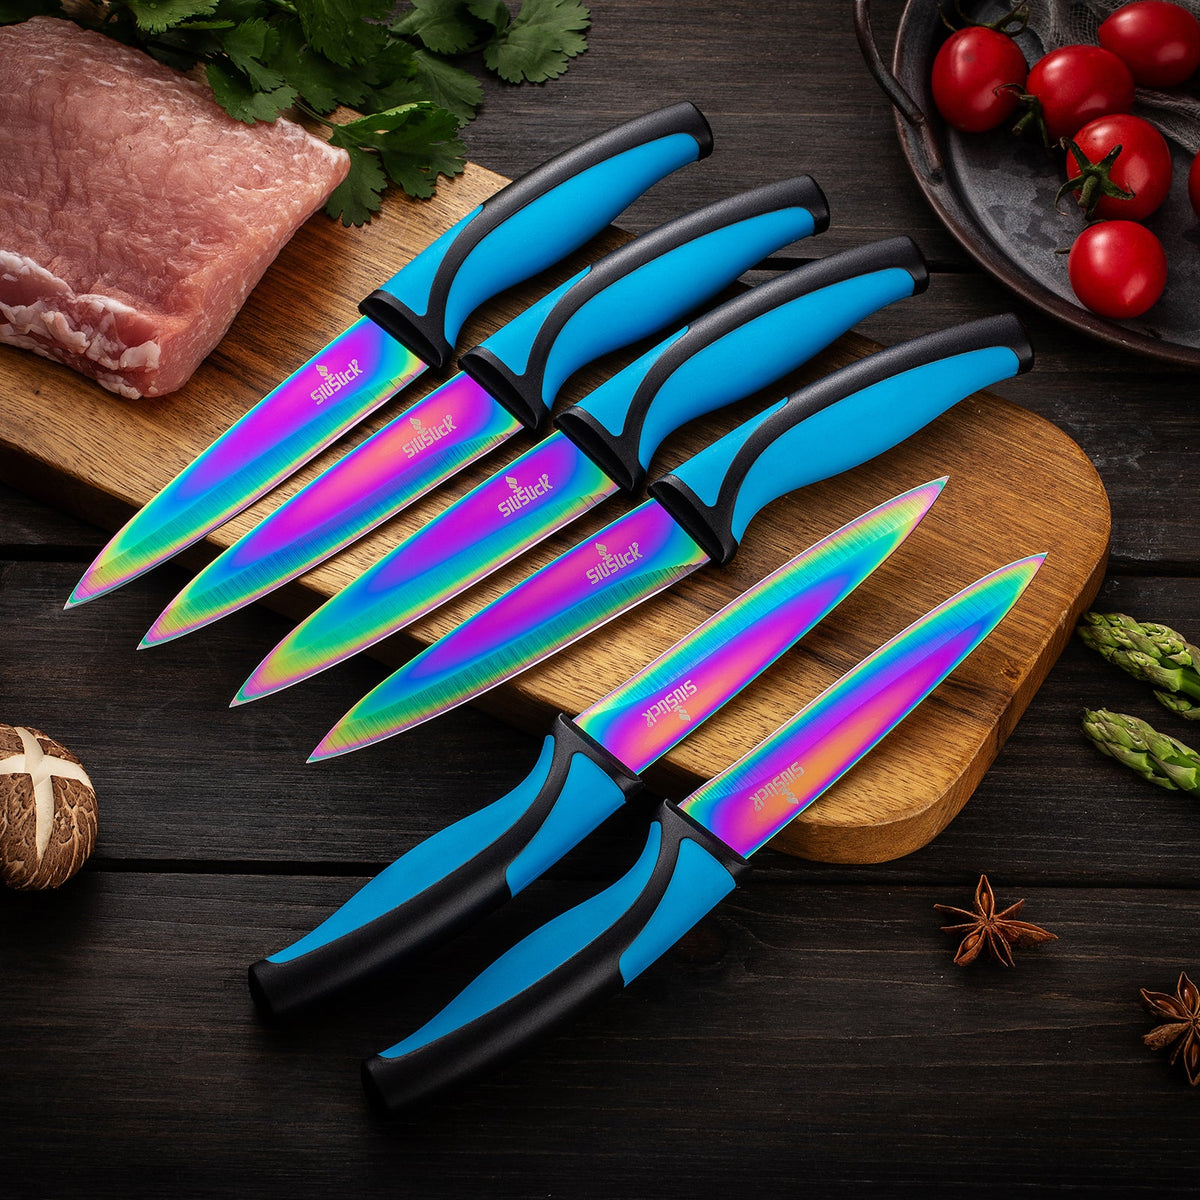 SiliSlick Stainless Steel Steak Knife Set - Iridescent Blue, Set of 6